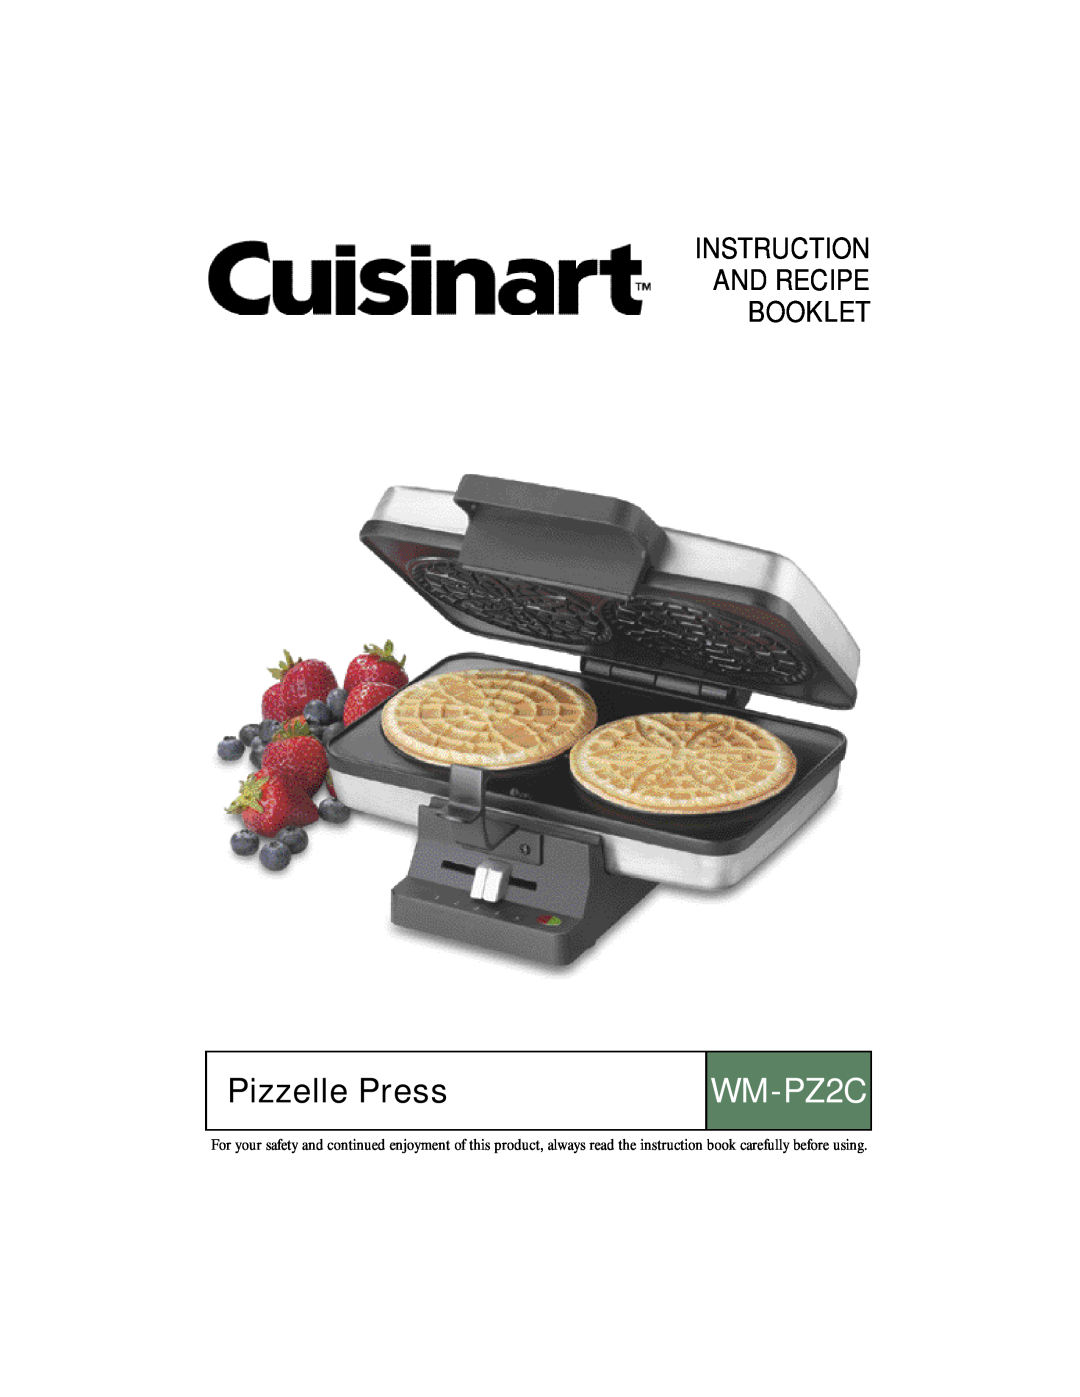 Cuisinart manual Pizzelle Press, WM-PZ2C, Instruction And Recipe Booklet 